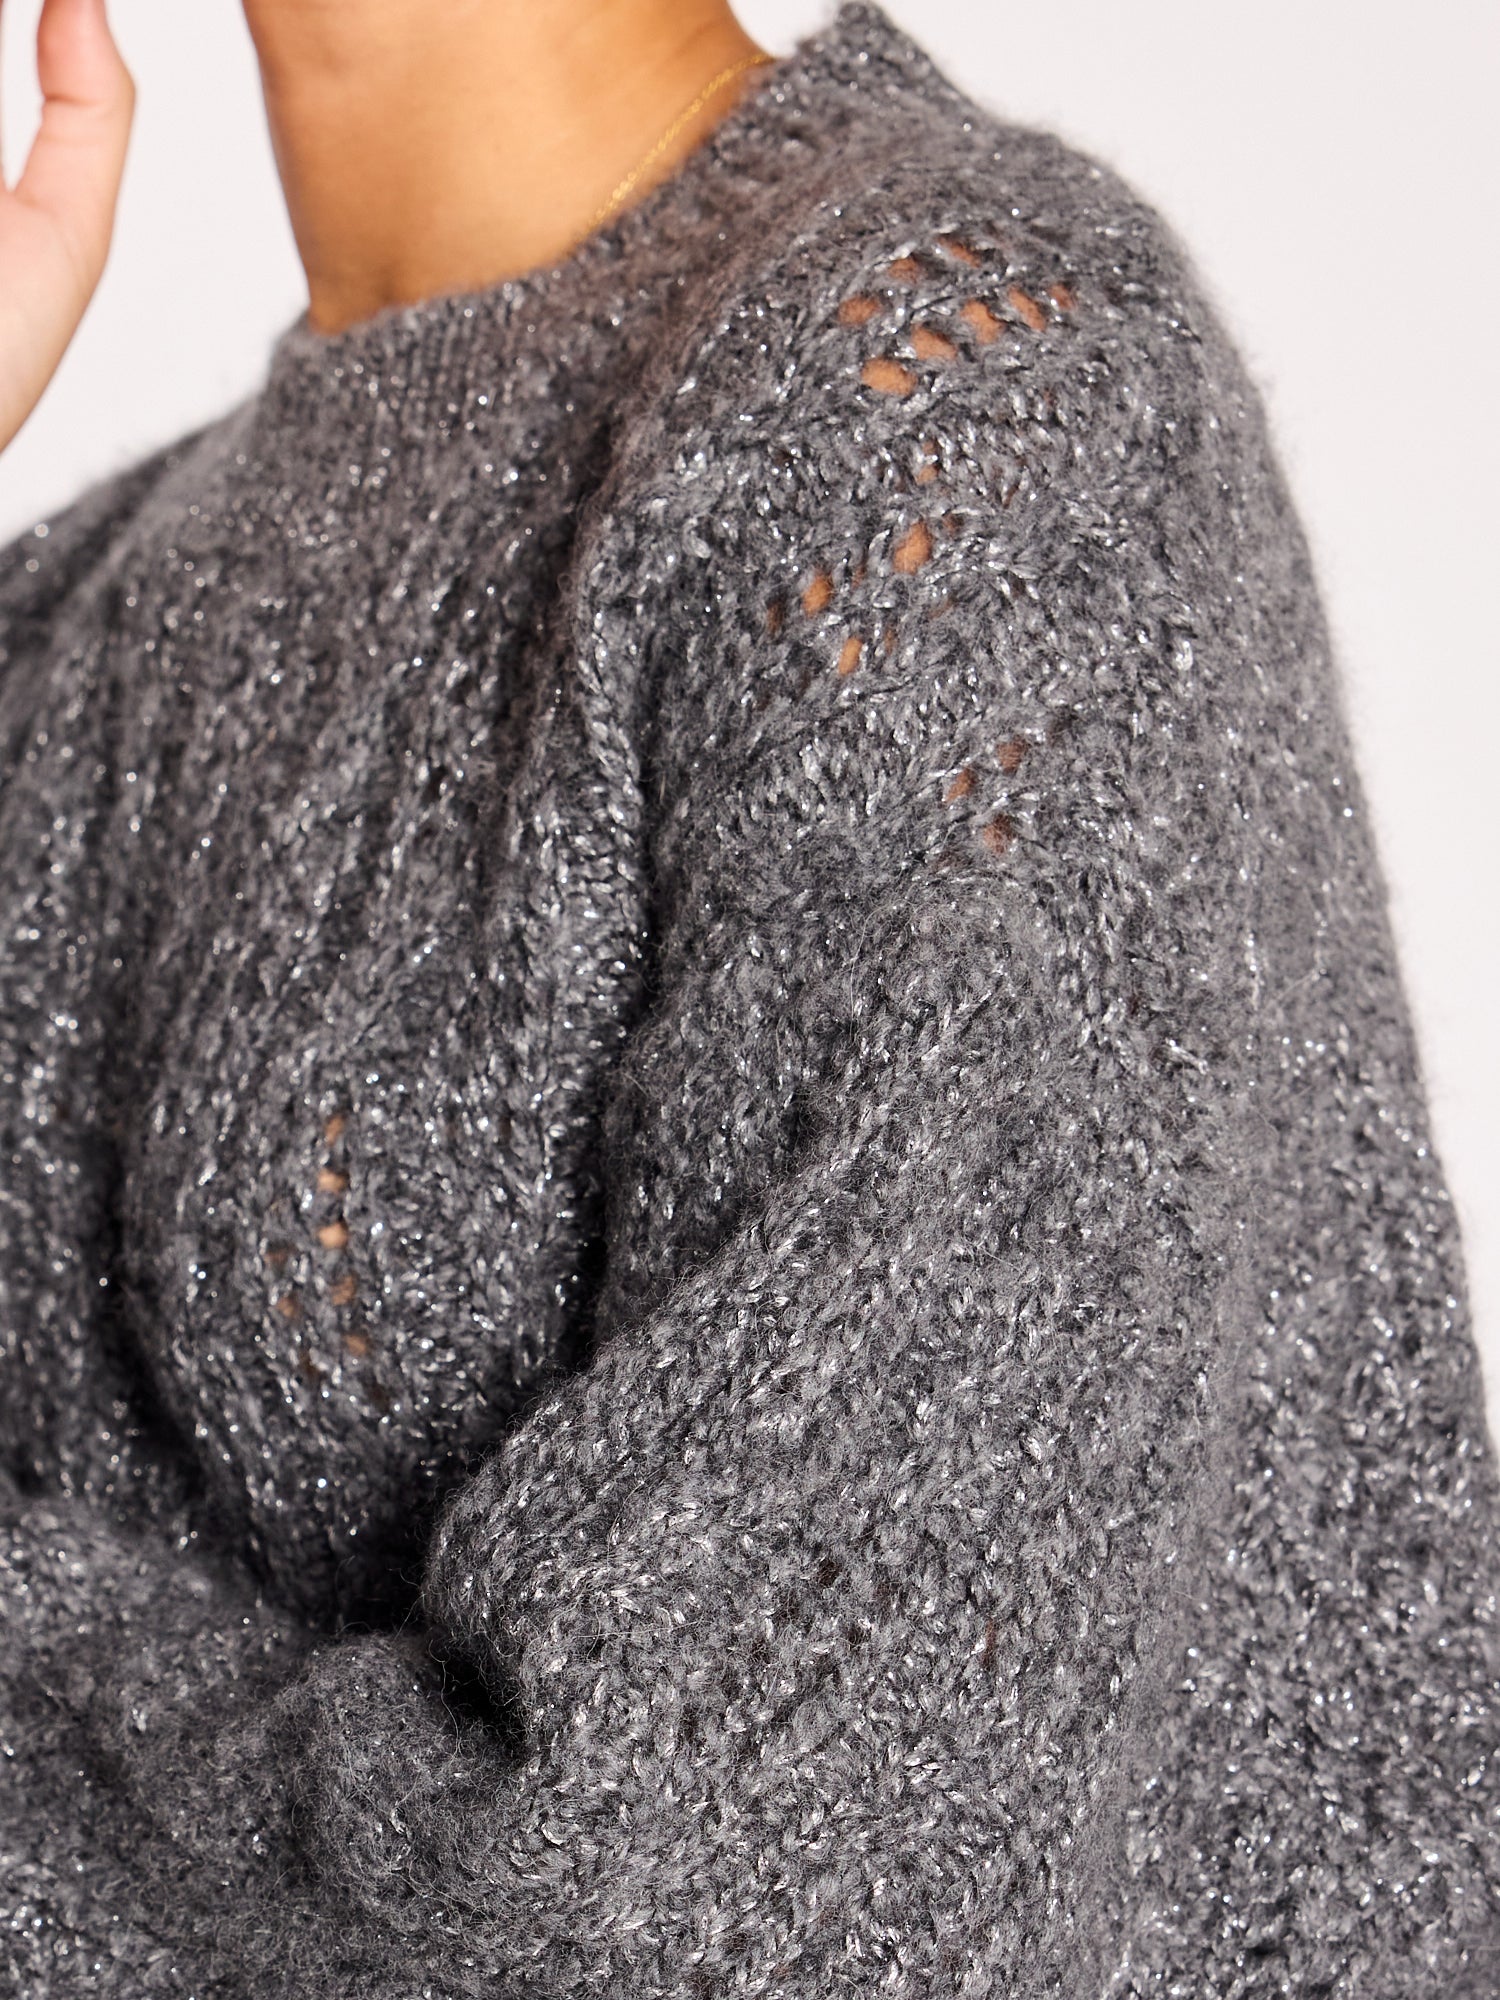 Restoin grey with metallic crewneck sweater close up